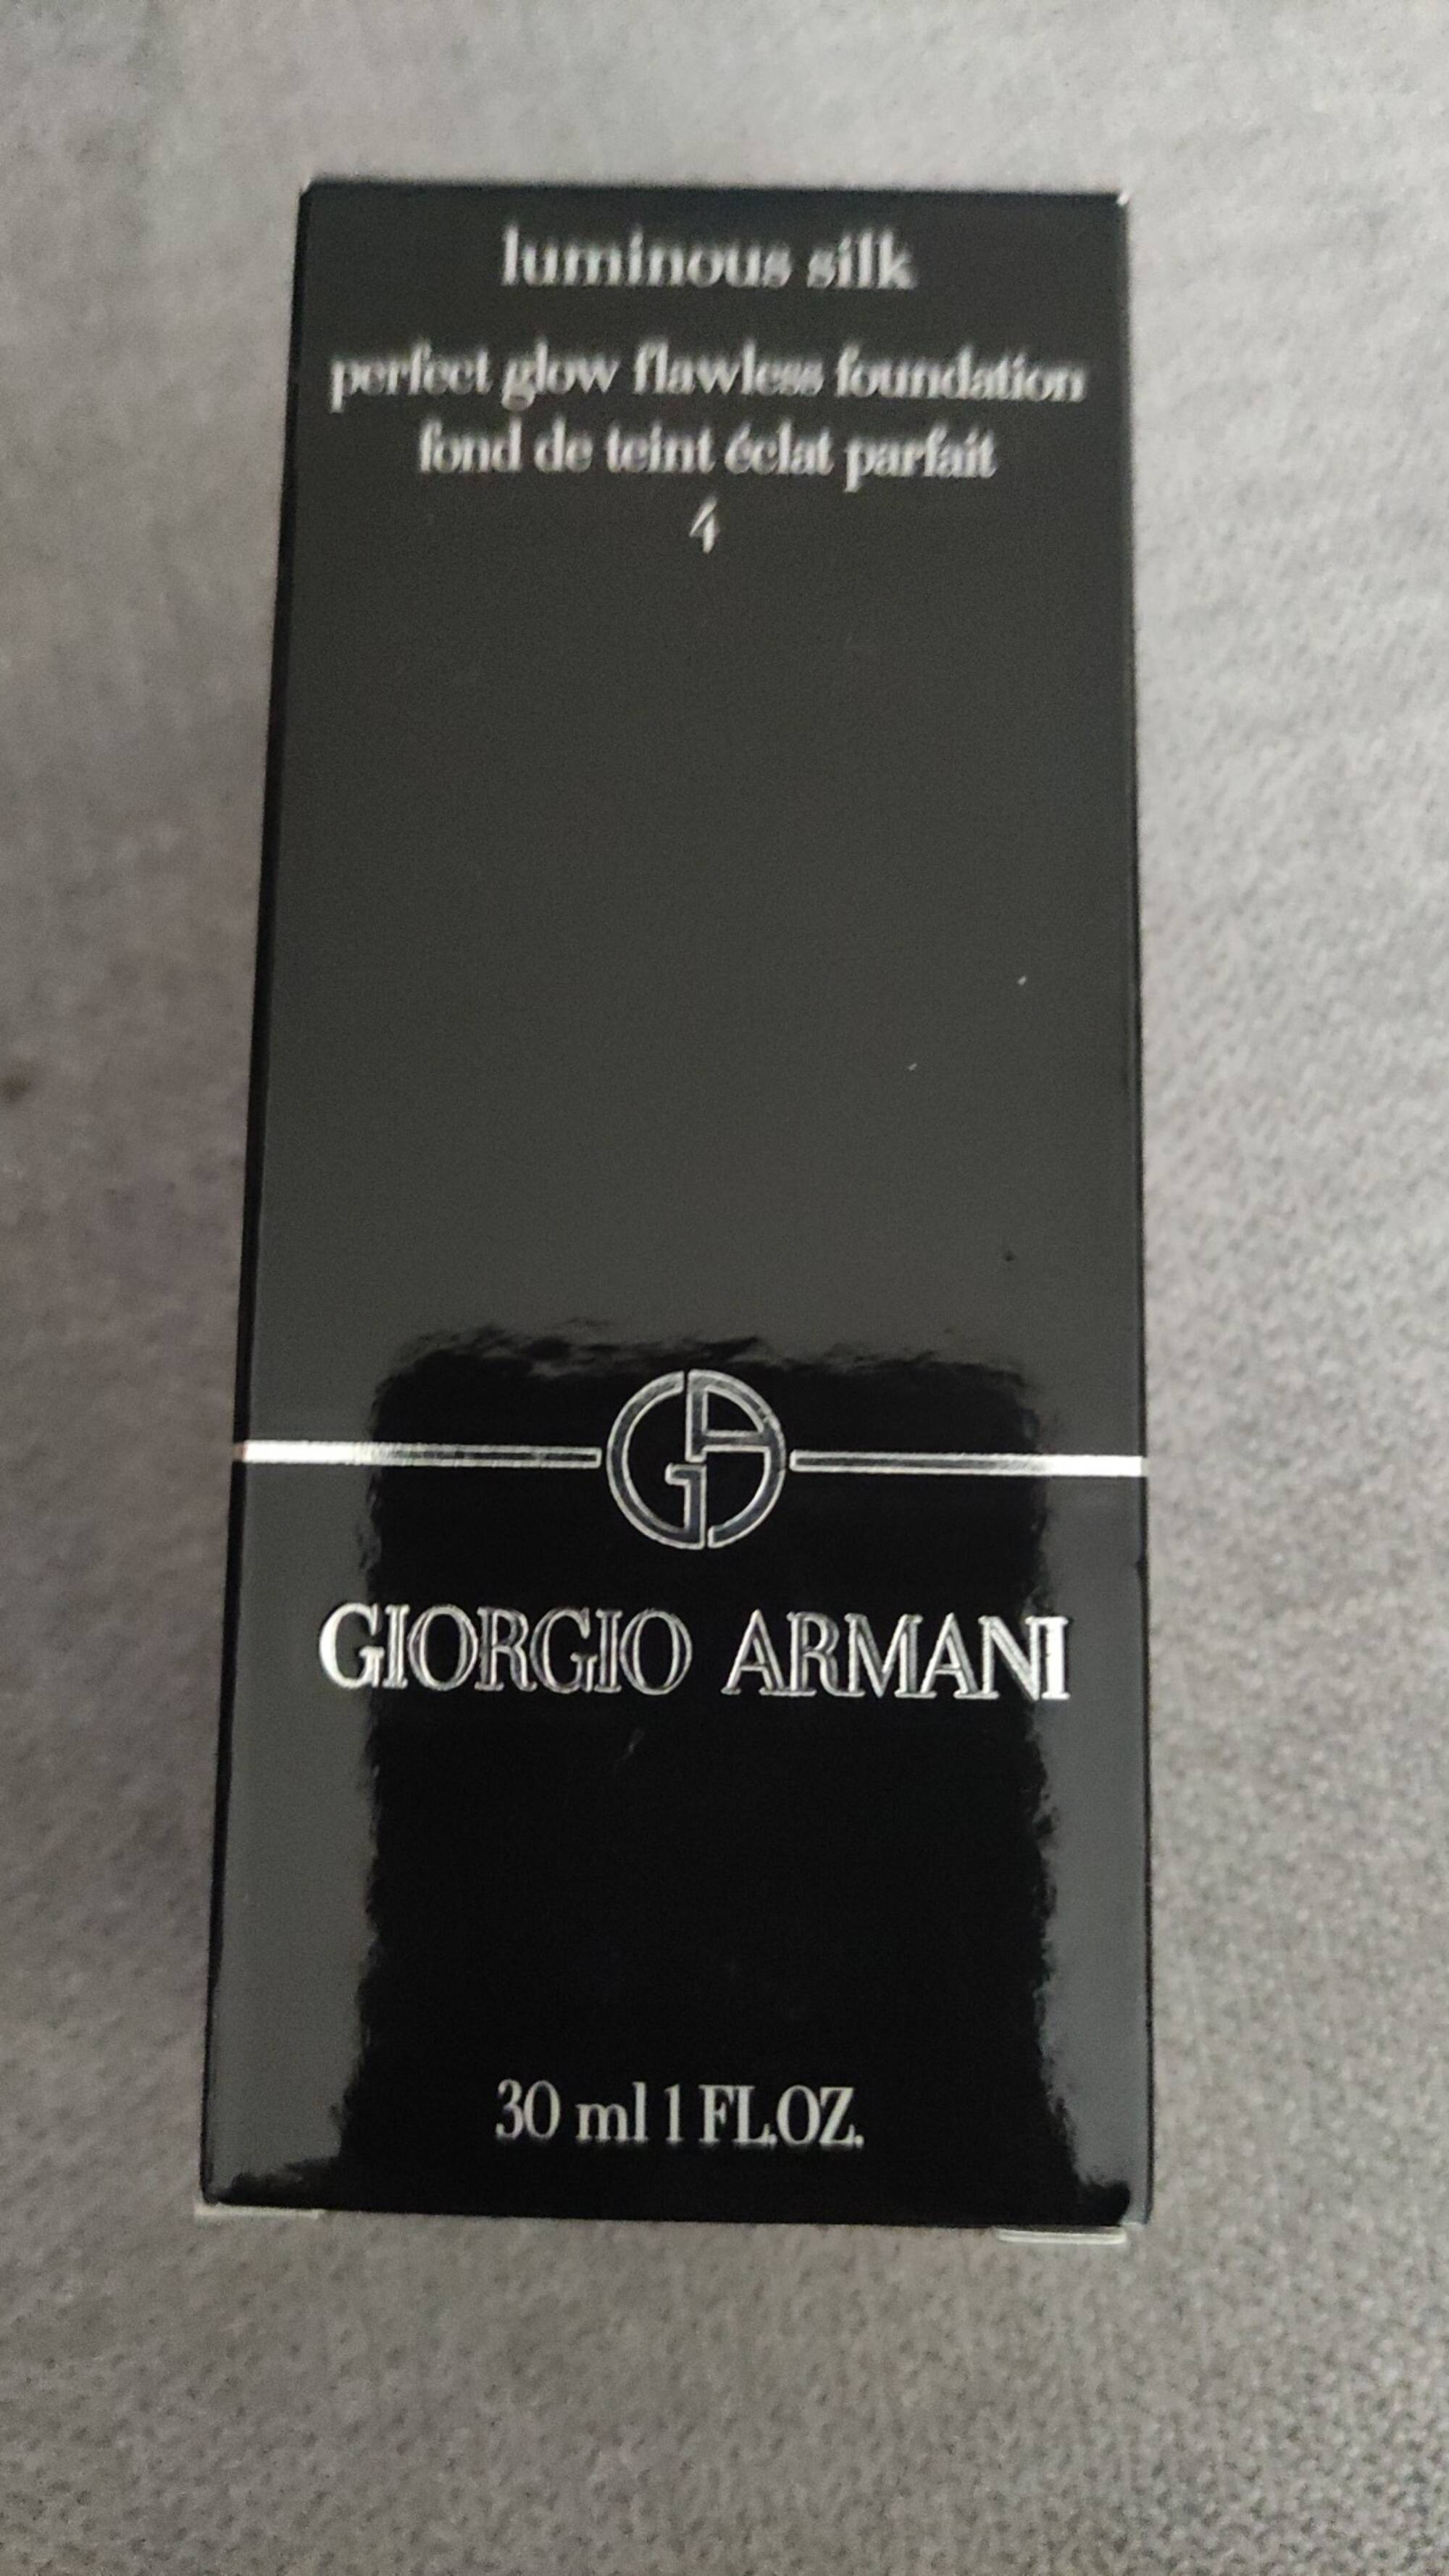 GIORGIO ARMANI - Luminous silk - Fond de teint éclat parfait 4